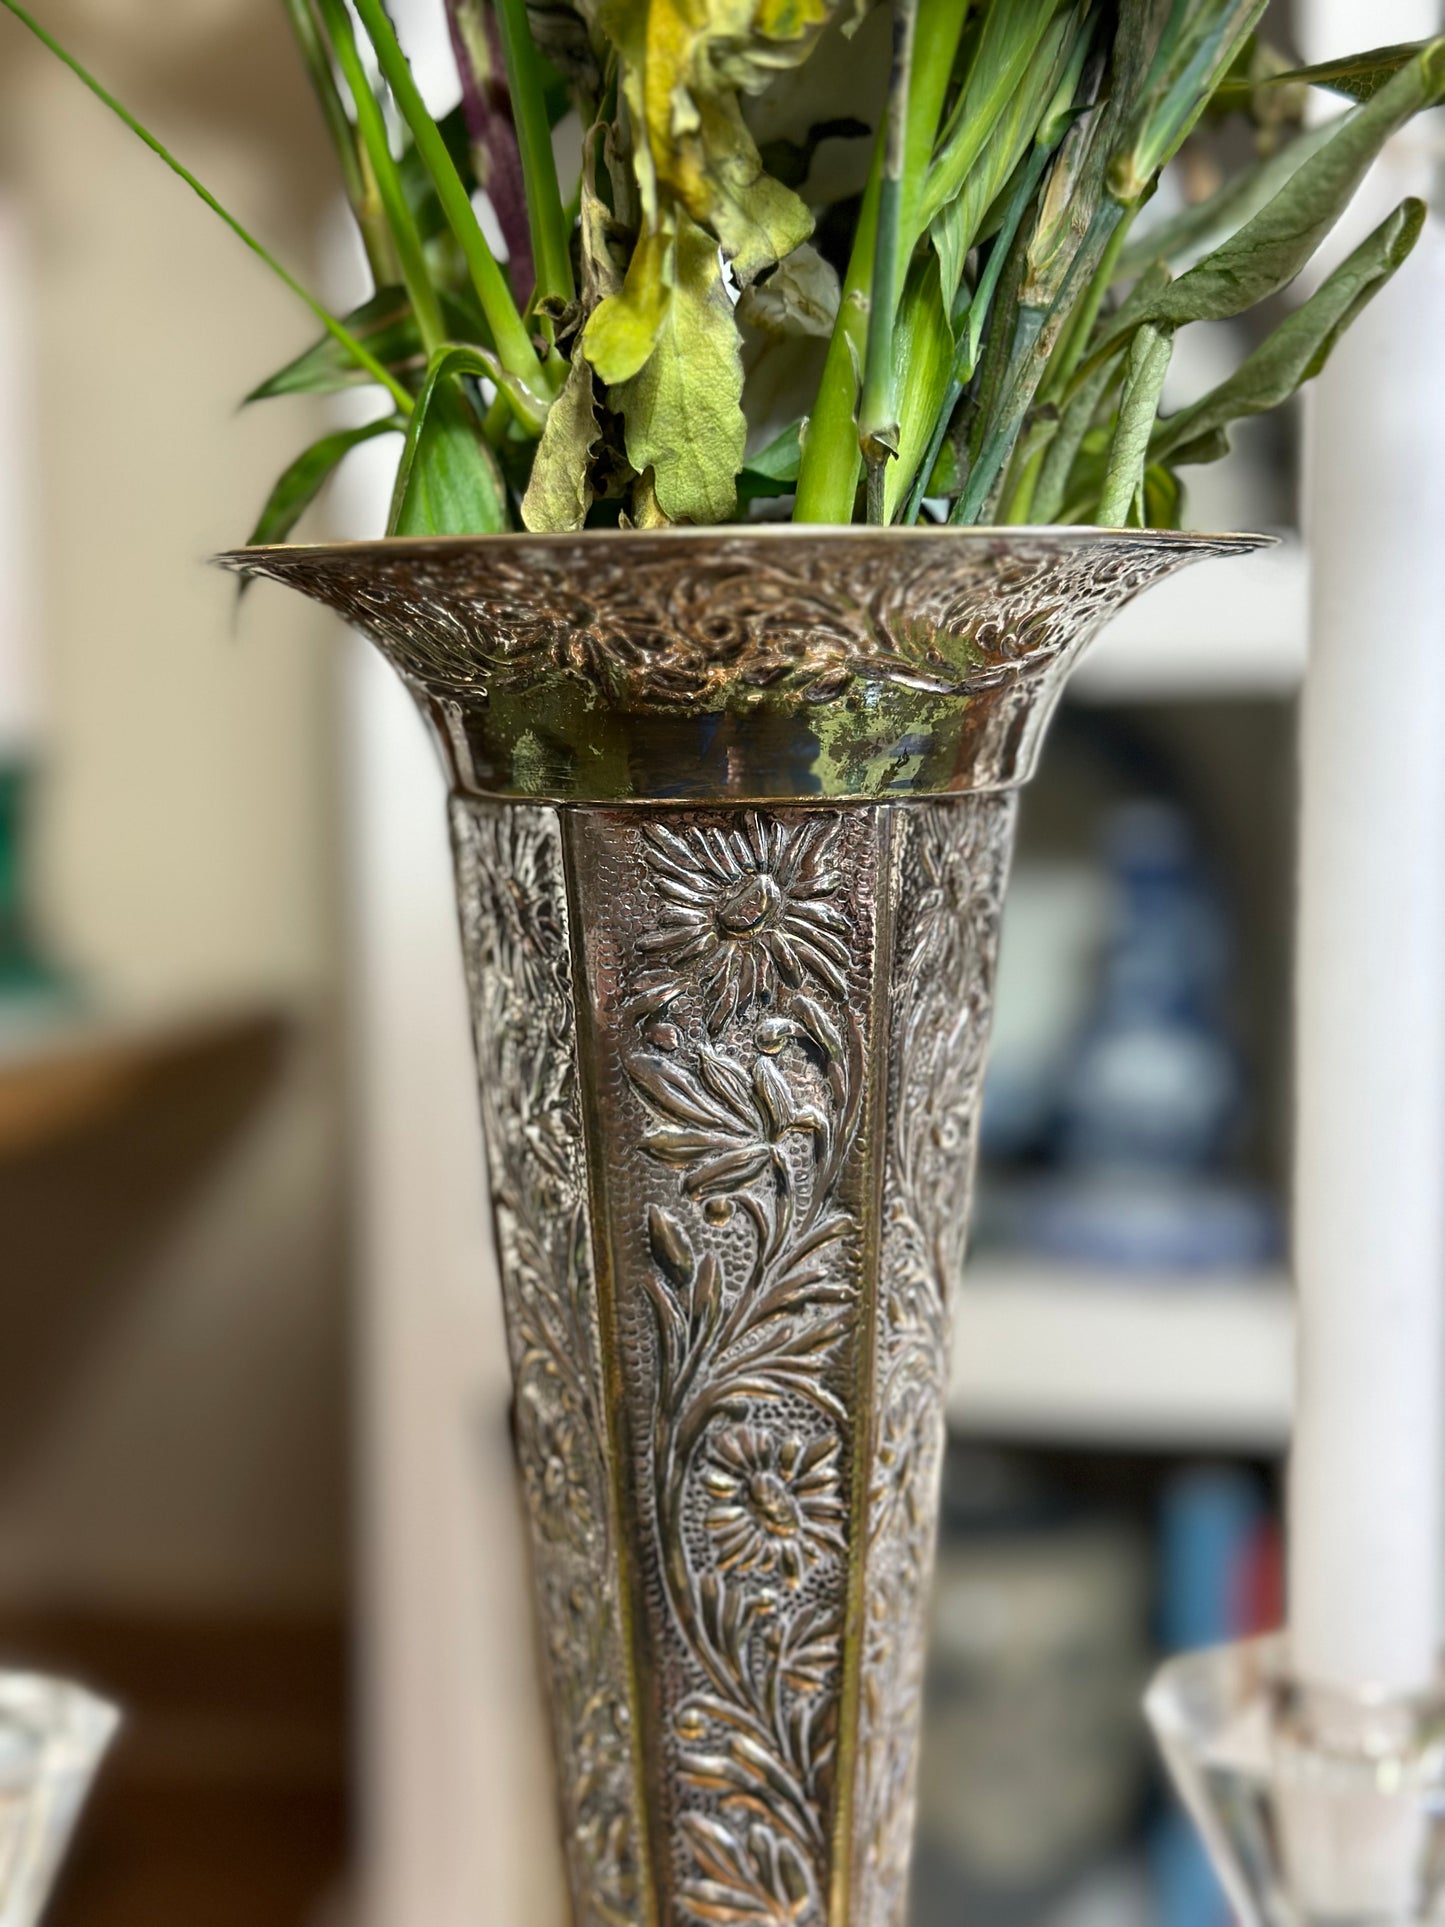 Silverplate, Hammered Floral Tall Trumpet Vase, 12” Tall - Pristine!